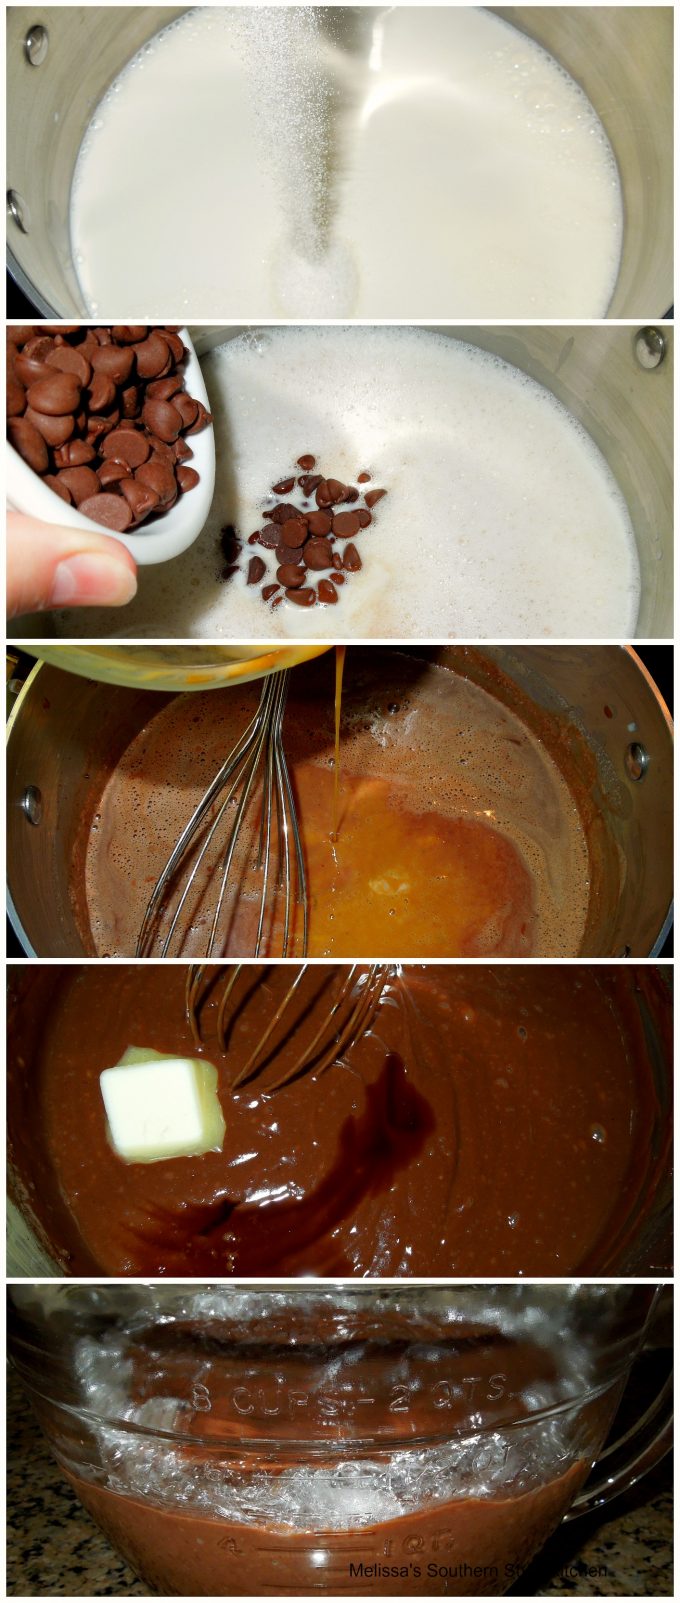 Homemade Triple Chocolate Pudding